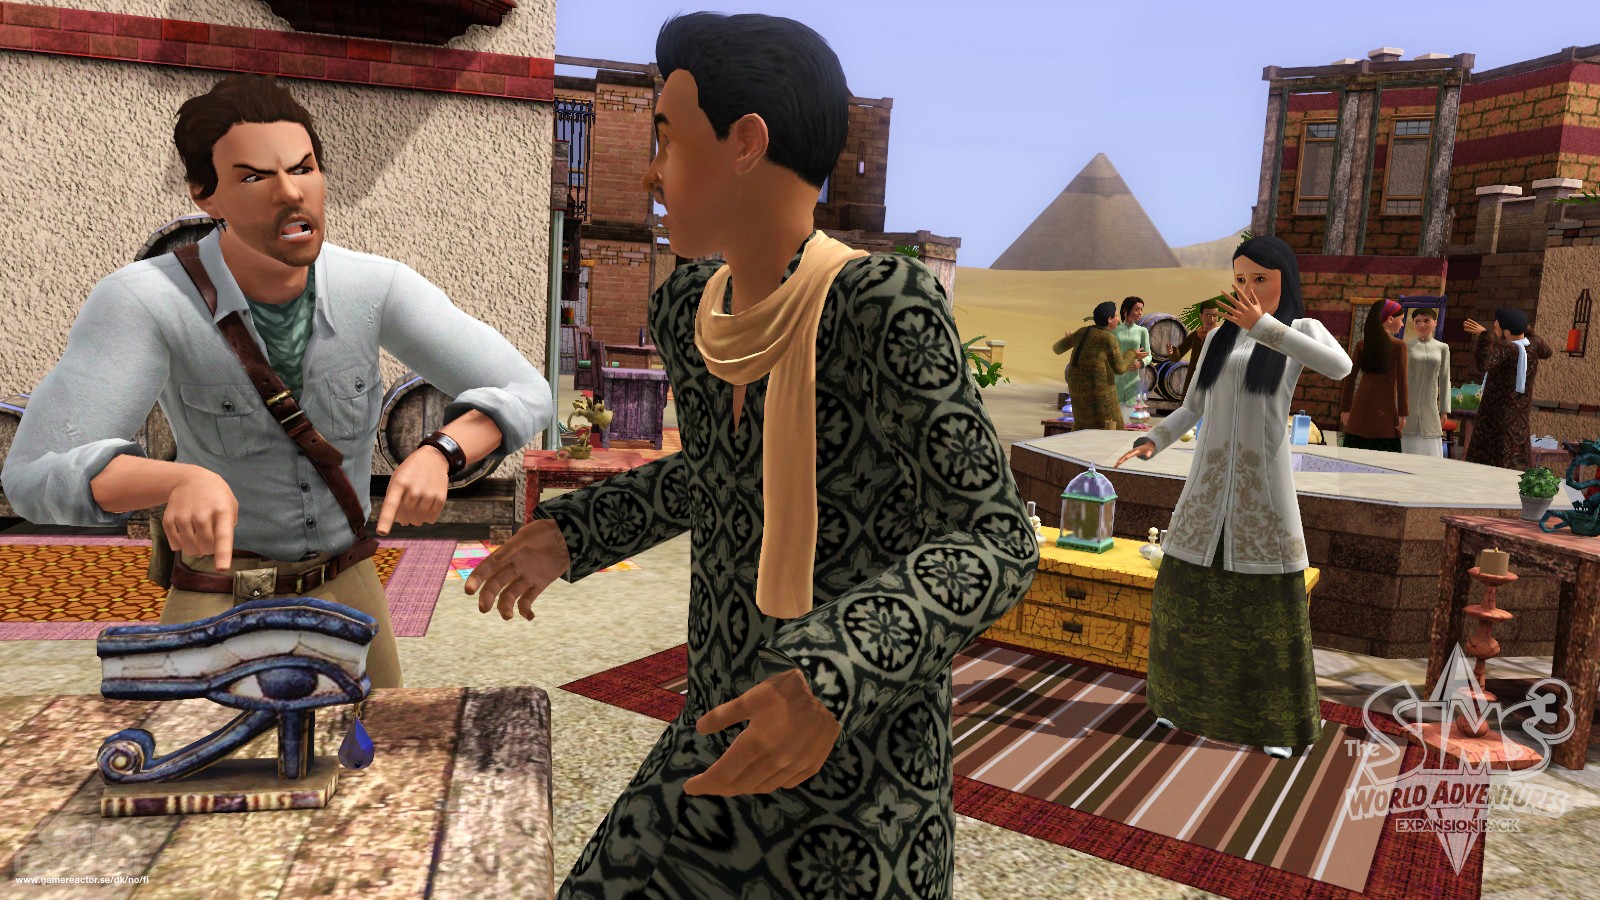 Sims 3 worlds. Симс 3 мир приключений. SIMS 3 приключения. Симс 3 ворлд Адвентурес. The SIMS 3 World Adventures Египет.